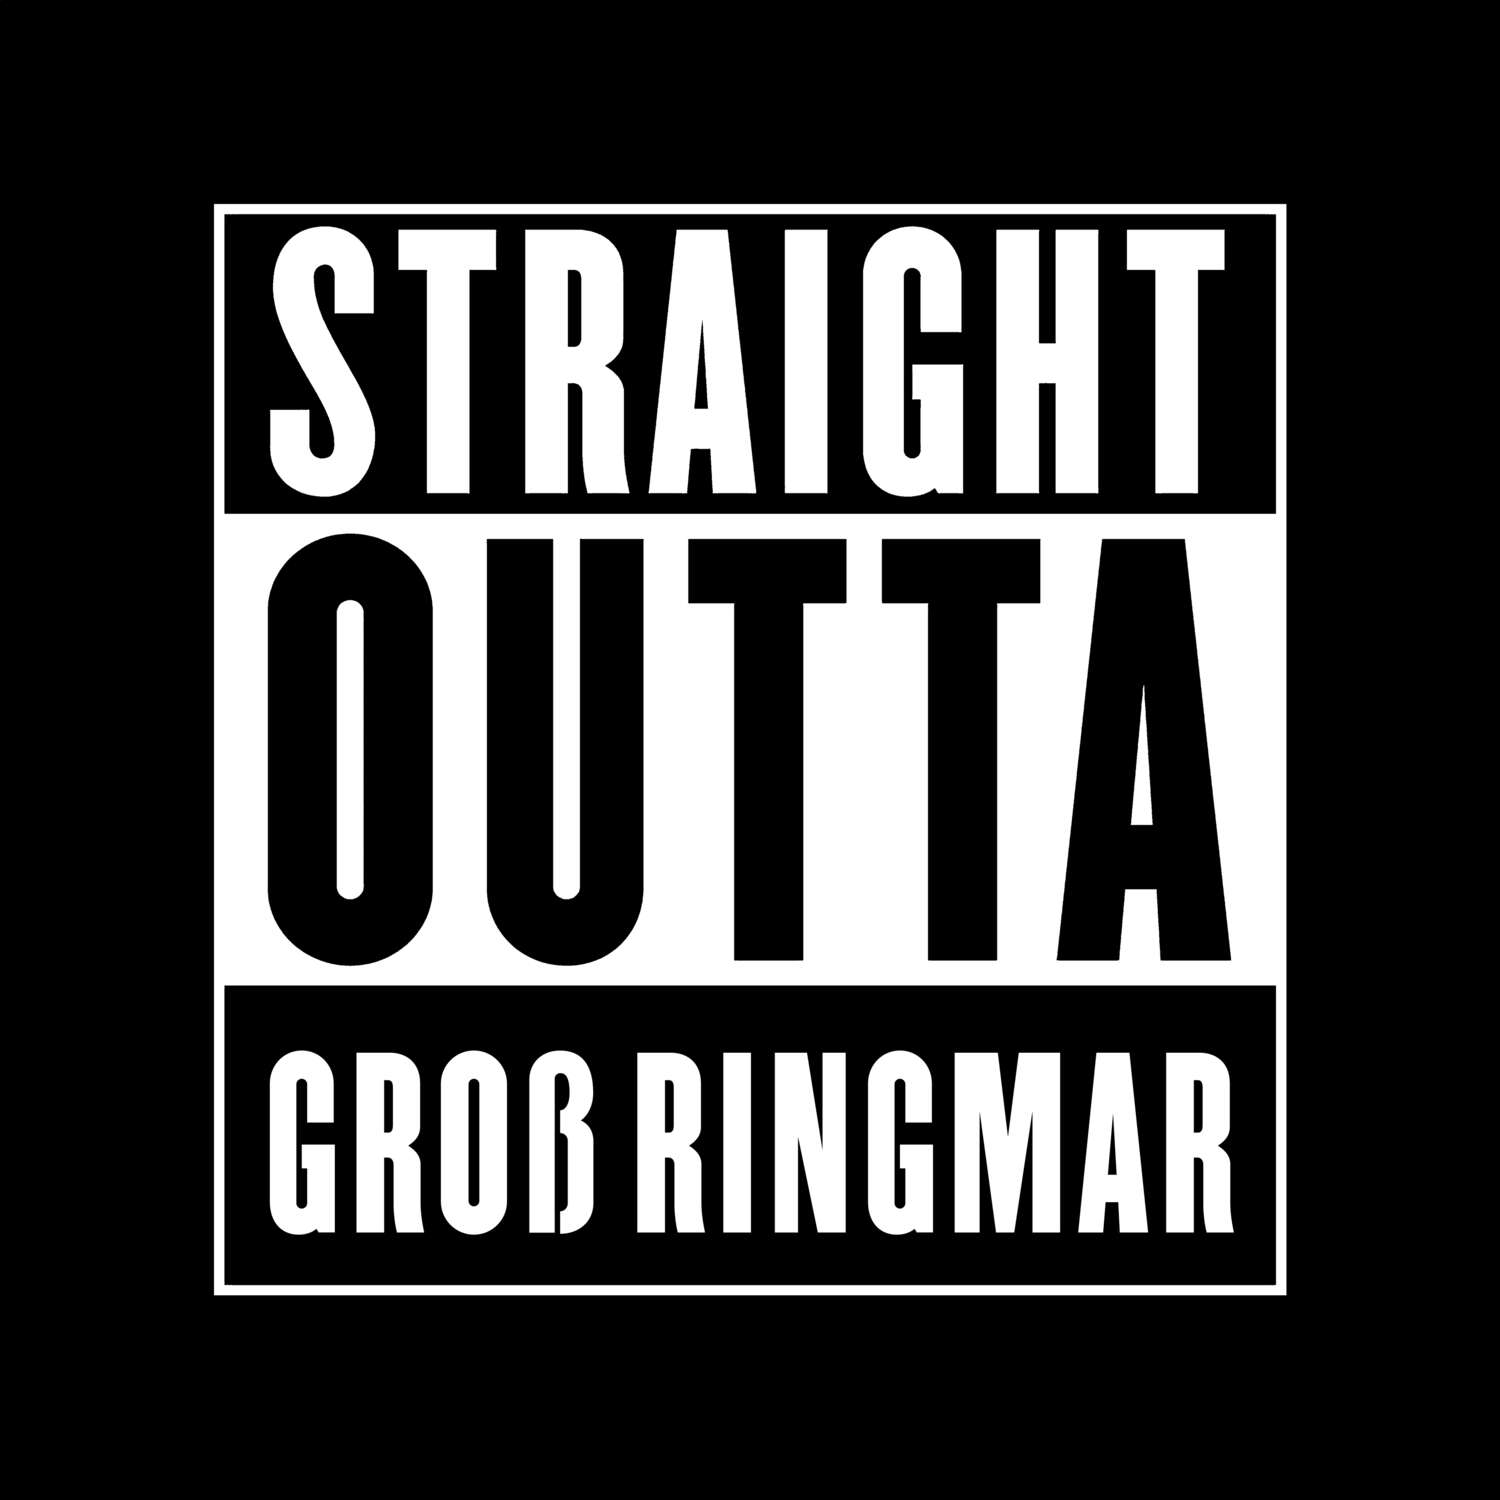 Groß Ringmar T-Shirt »Straight Outta«